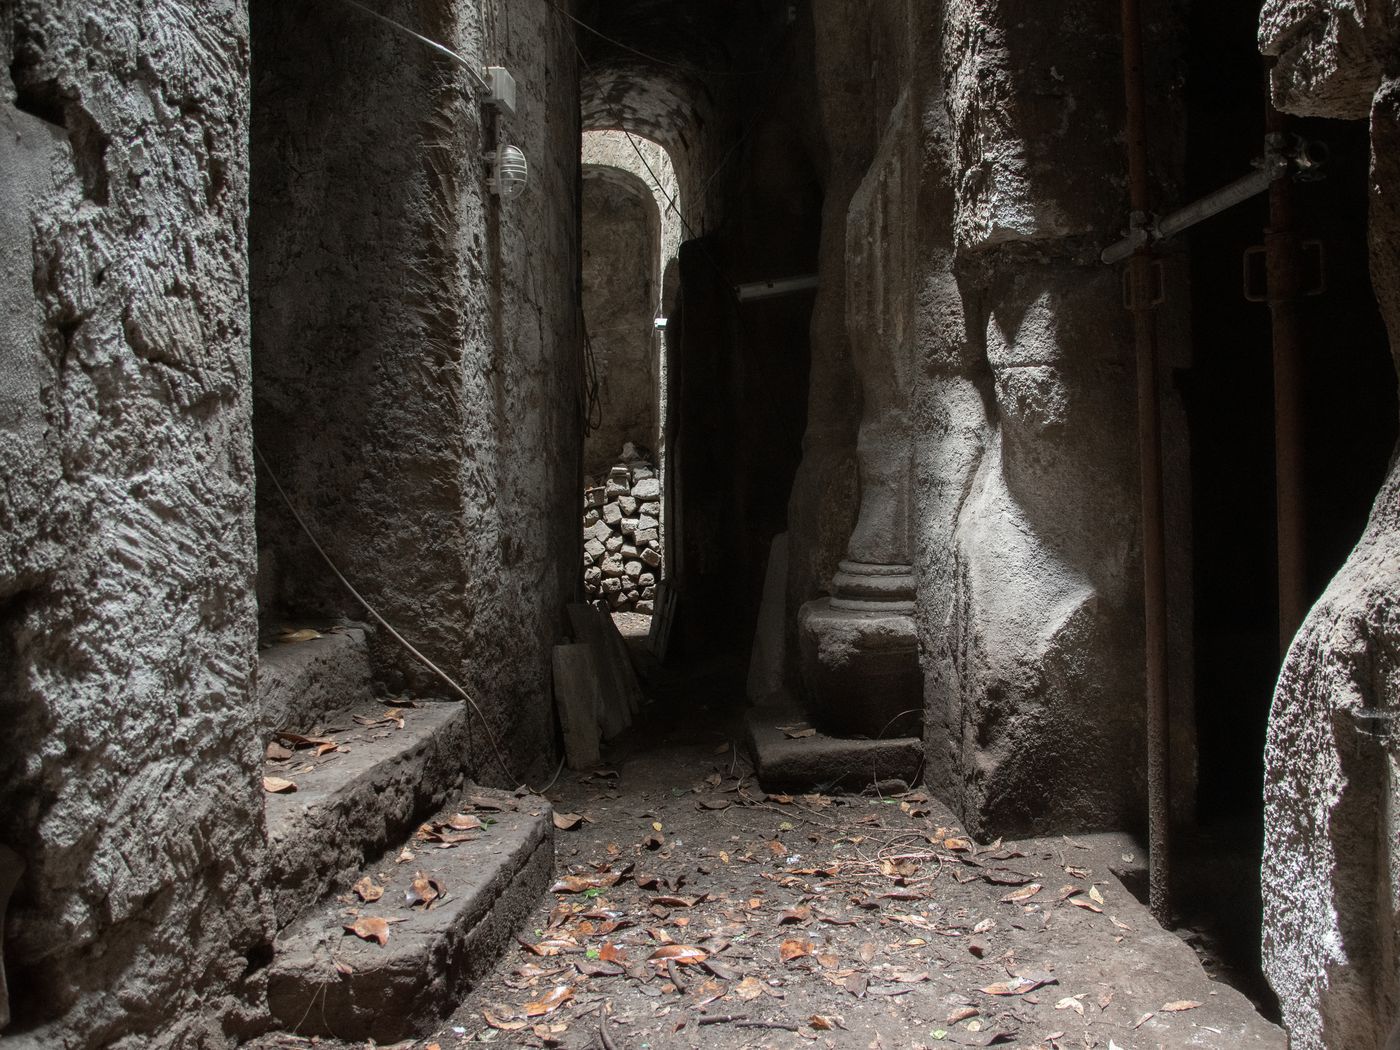 View of passageway in ancient Greek/Roman necropolis in Naples